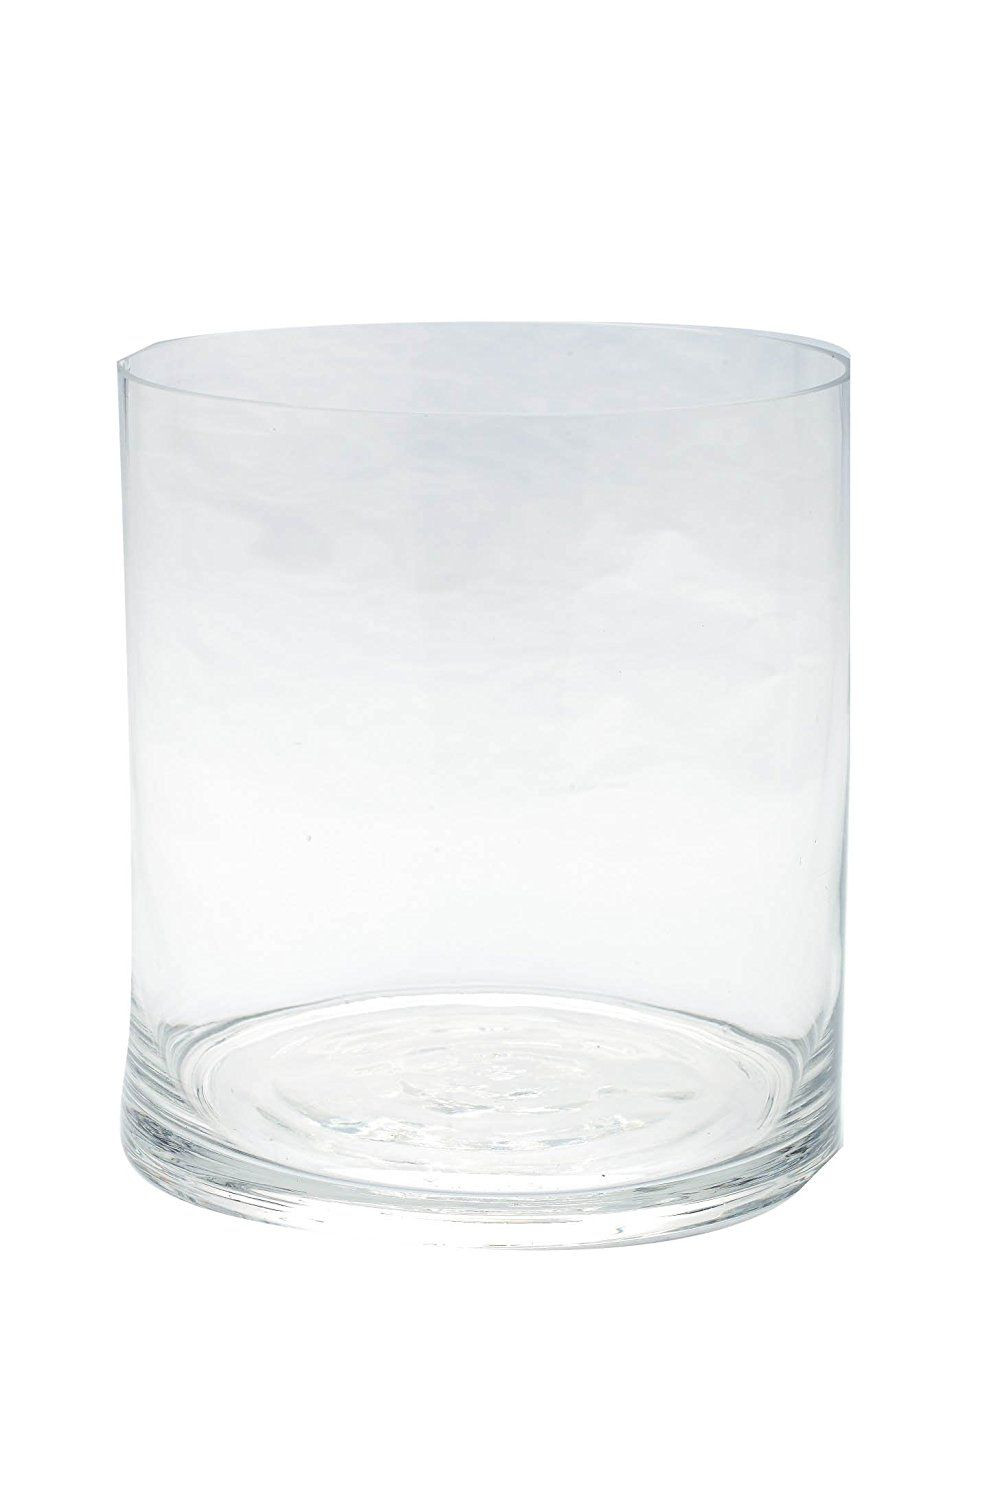 6 x 12 cylinder vase of diamond star glass 84010c clear cylinder 9 by 10 want pertaining to diamond star glass 84010c clear cylinder 9 by 10 want